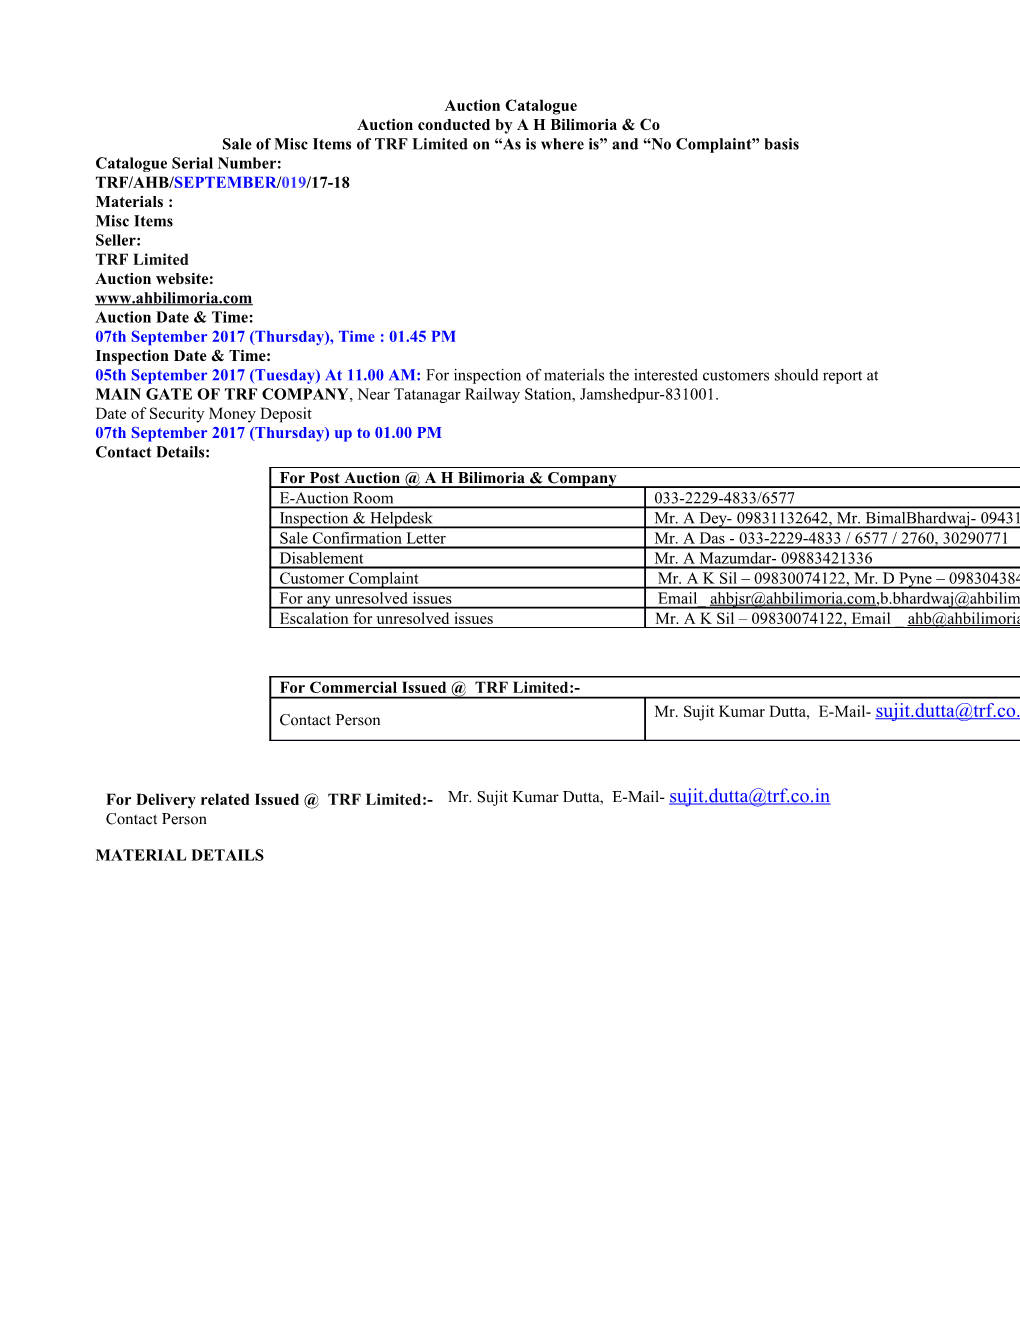 Catalogue Serial Number: TSL/AHB/SEPTEMBER/019/17-18